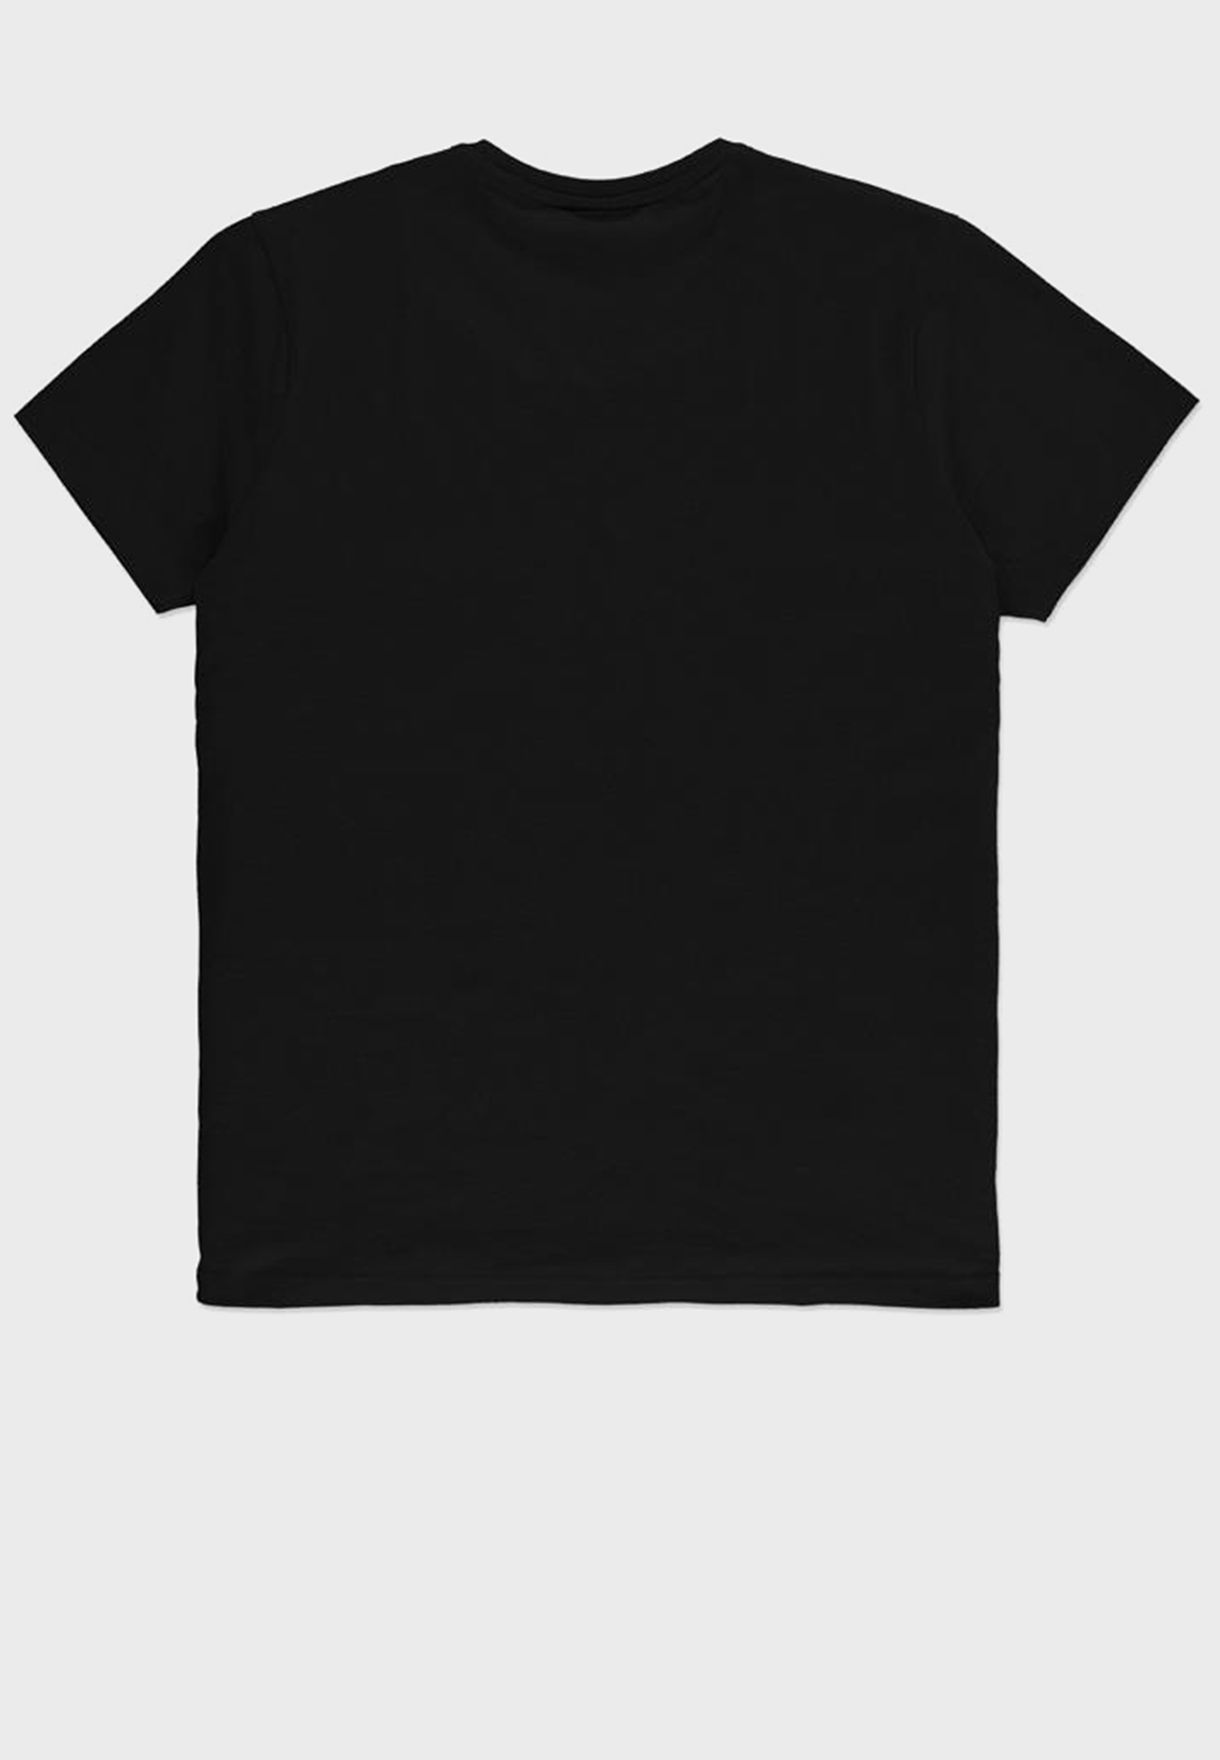 Miles Morales Crew Neck T-Shirt